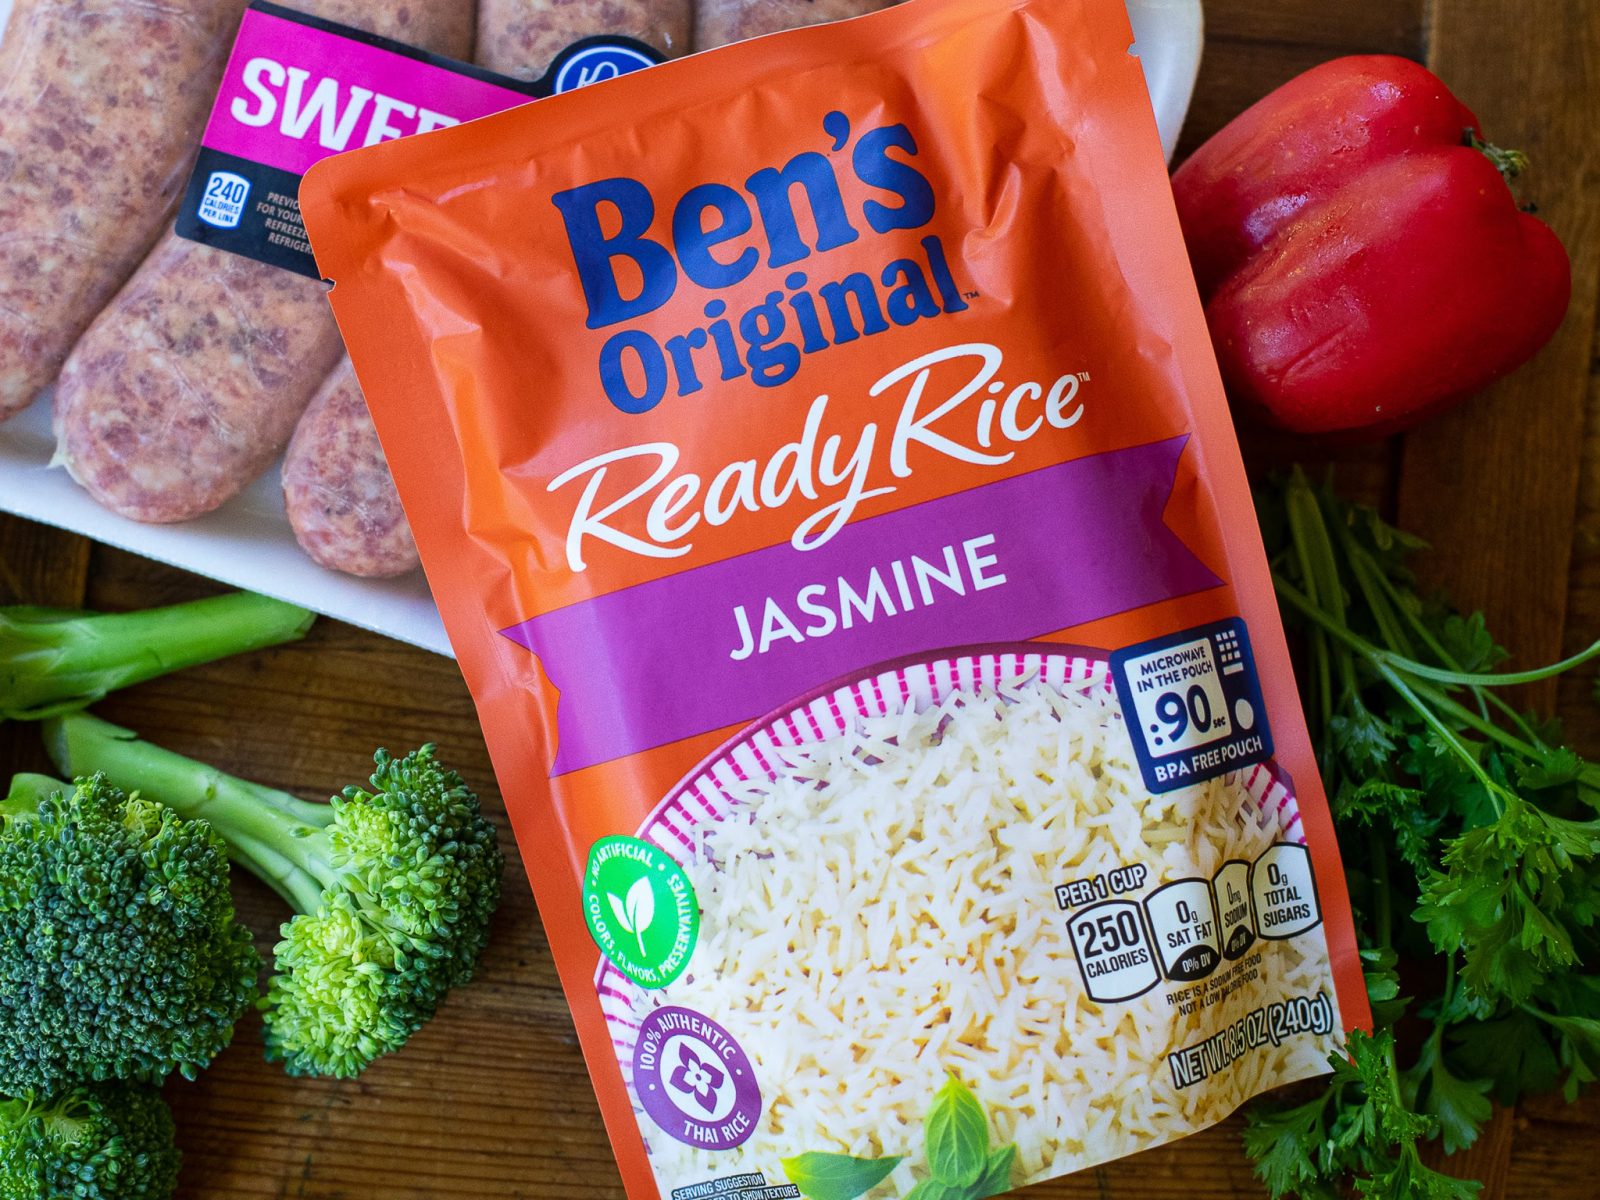 Ben’s Original Ready Rice As Low As $2.08 At Publix